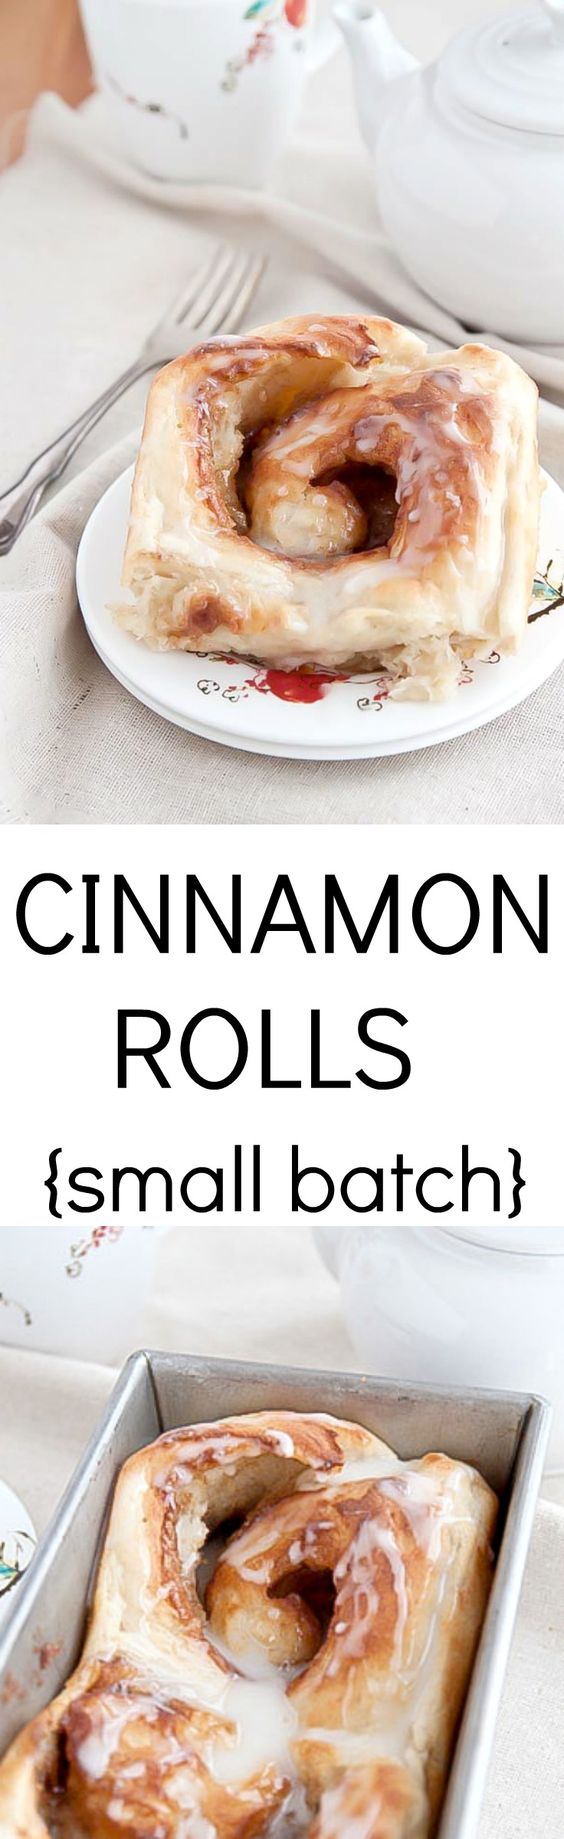 Potato cinnamon rolls for two, small batch recipe! Makes just 2 big cinnamon rolls in a bread loaf pan. #potatocinnamonrolls #potatodessert #cinnamonrollsfortwo #smallbatchcinnamonrolls 